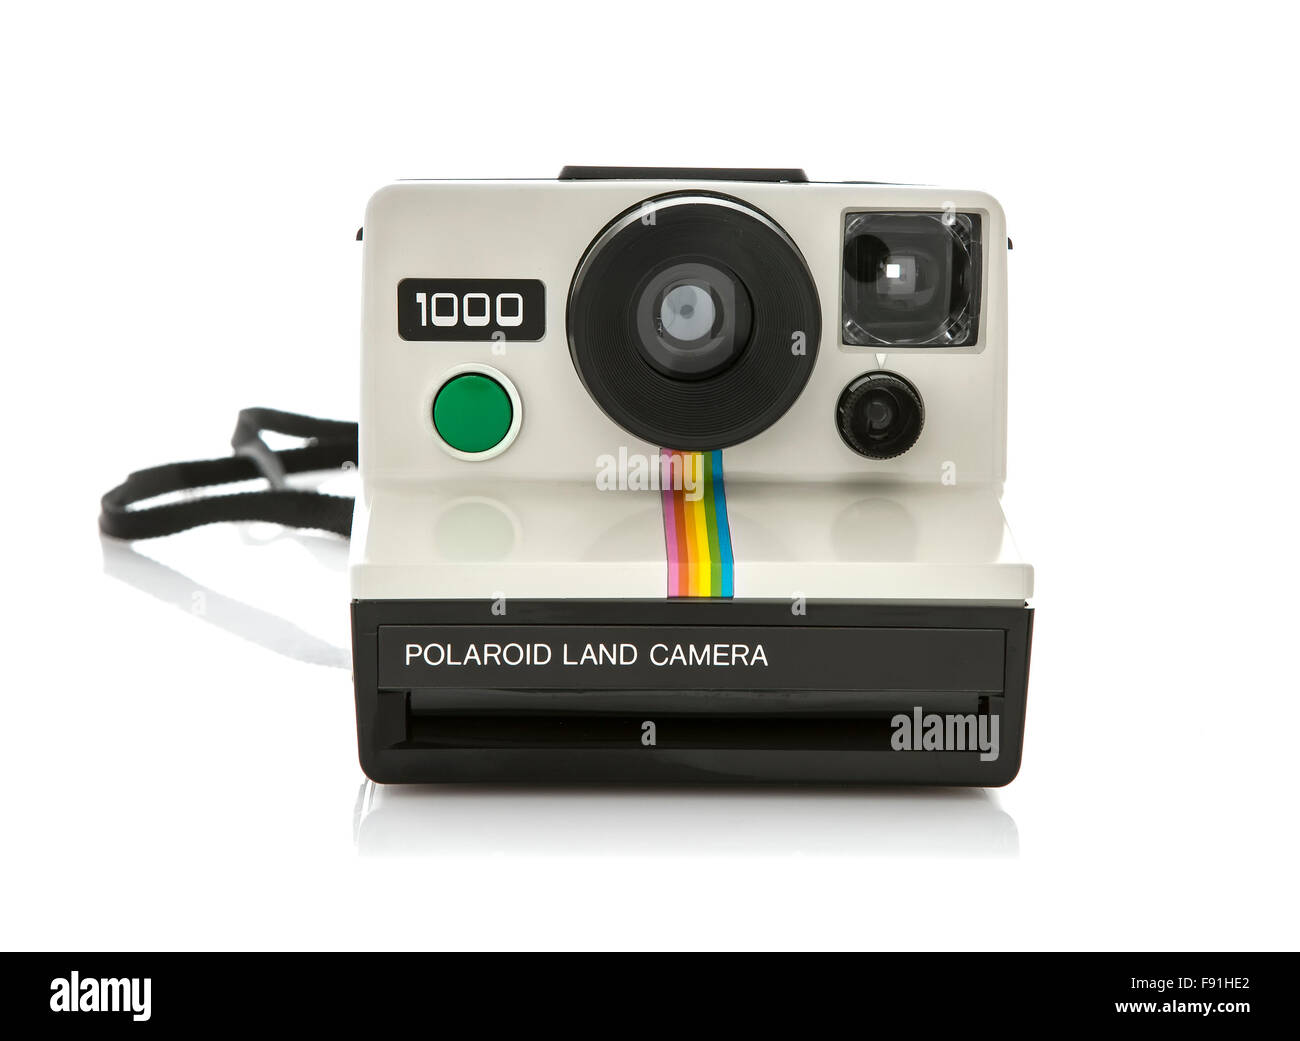 Polaroid 1000 Land Camera on a white background Stock Photo - Alamy